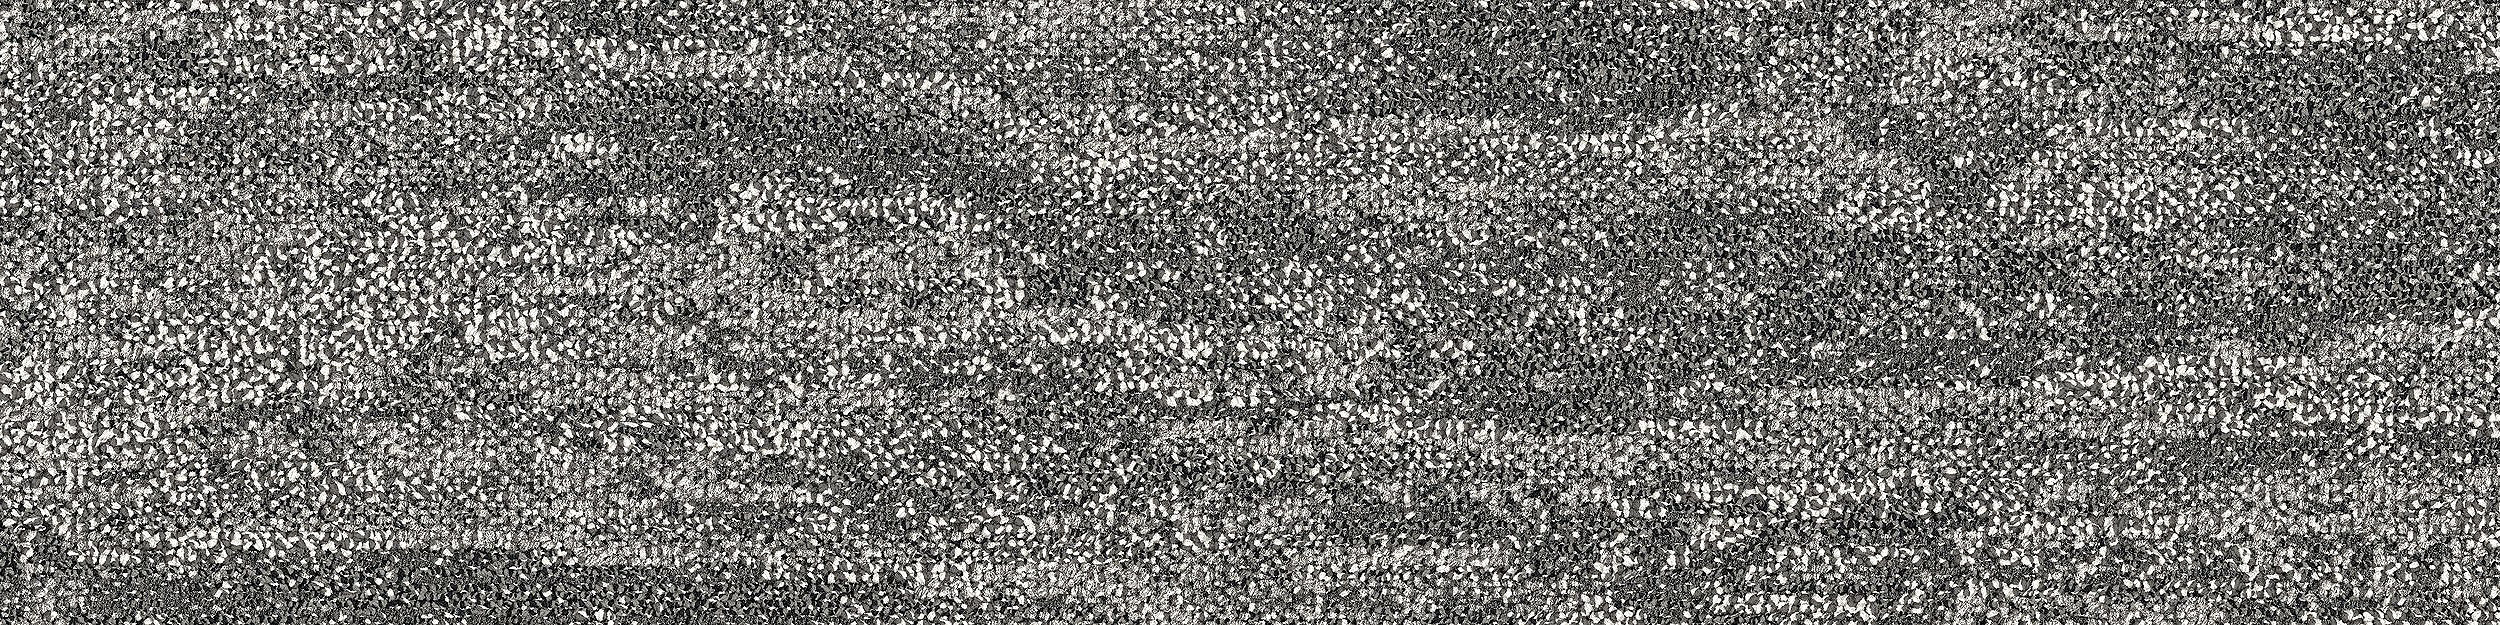 Rock Springs Carpet Tile In Nickel Gneiss imagen número 4